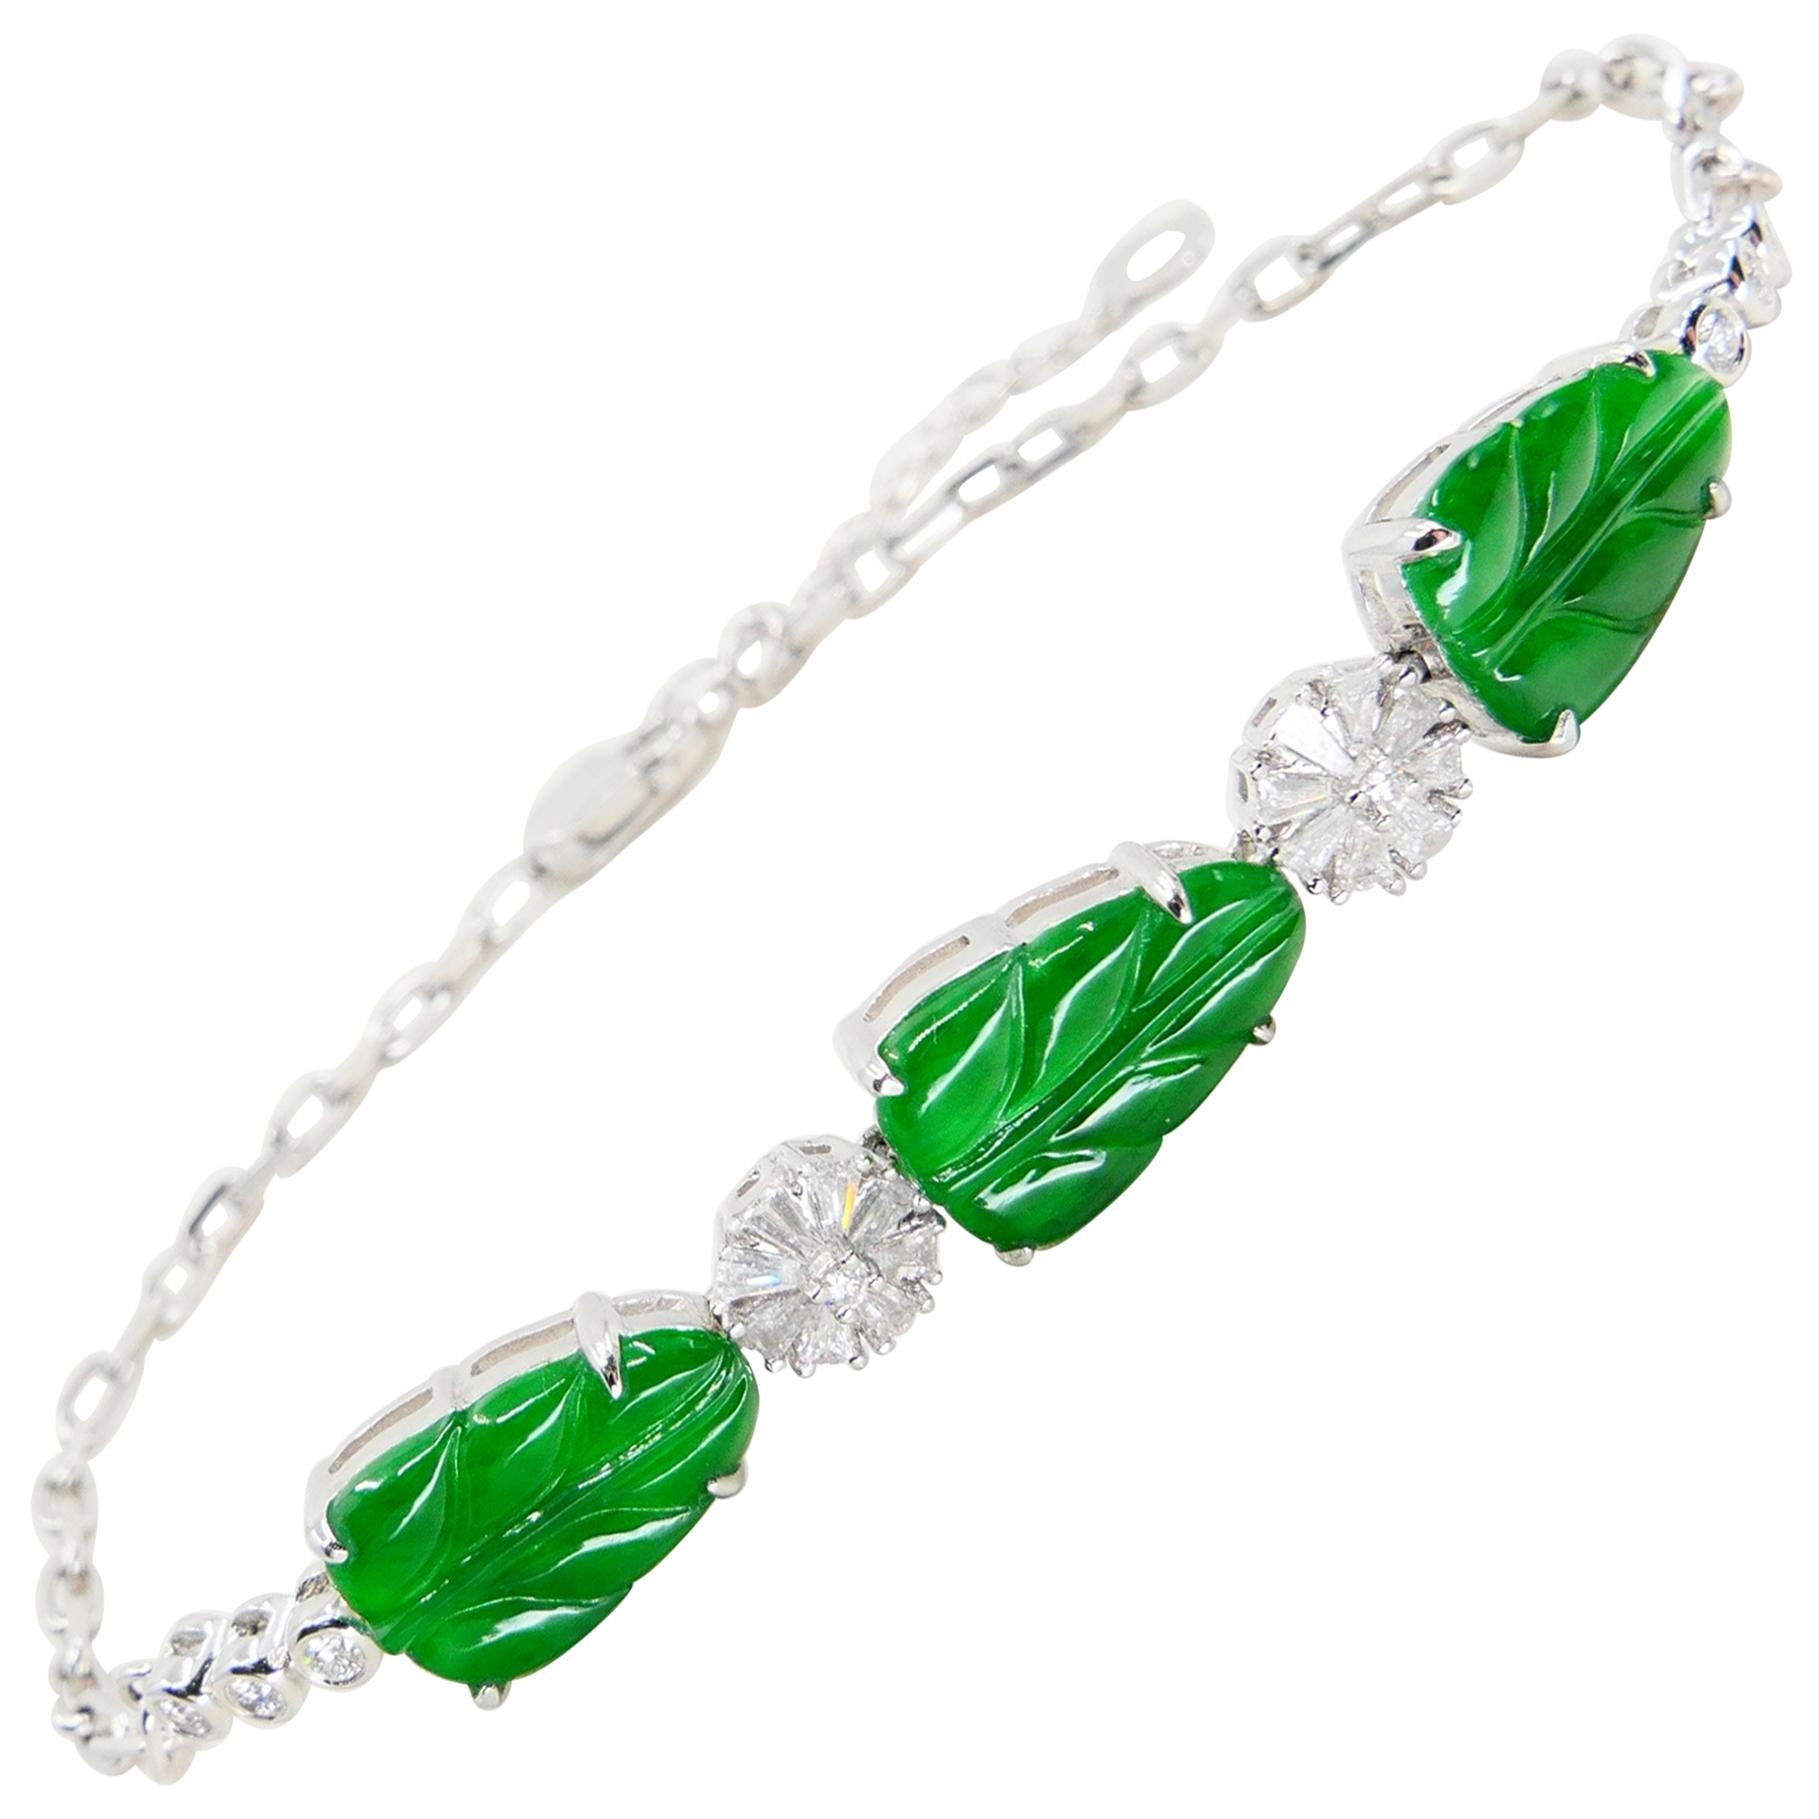 Certified Icy Apple Green Jade and Diamond Bracelet, Borderline Imperial Green